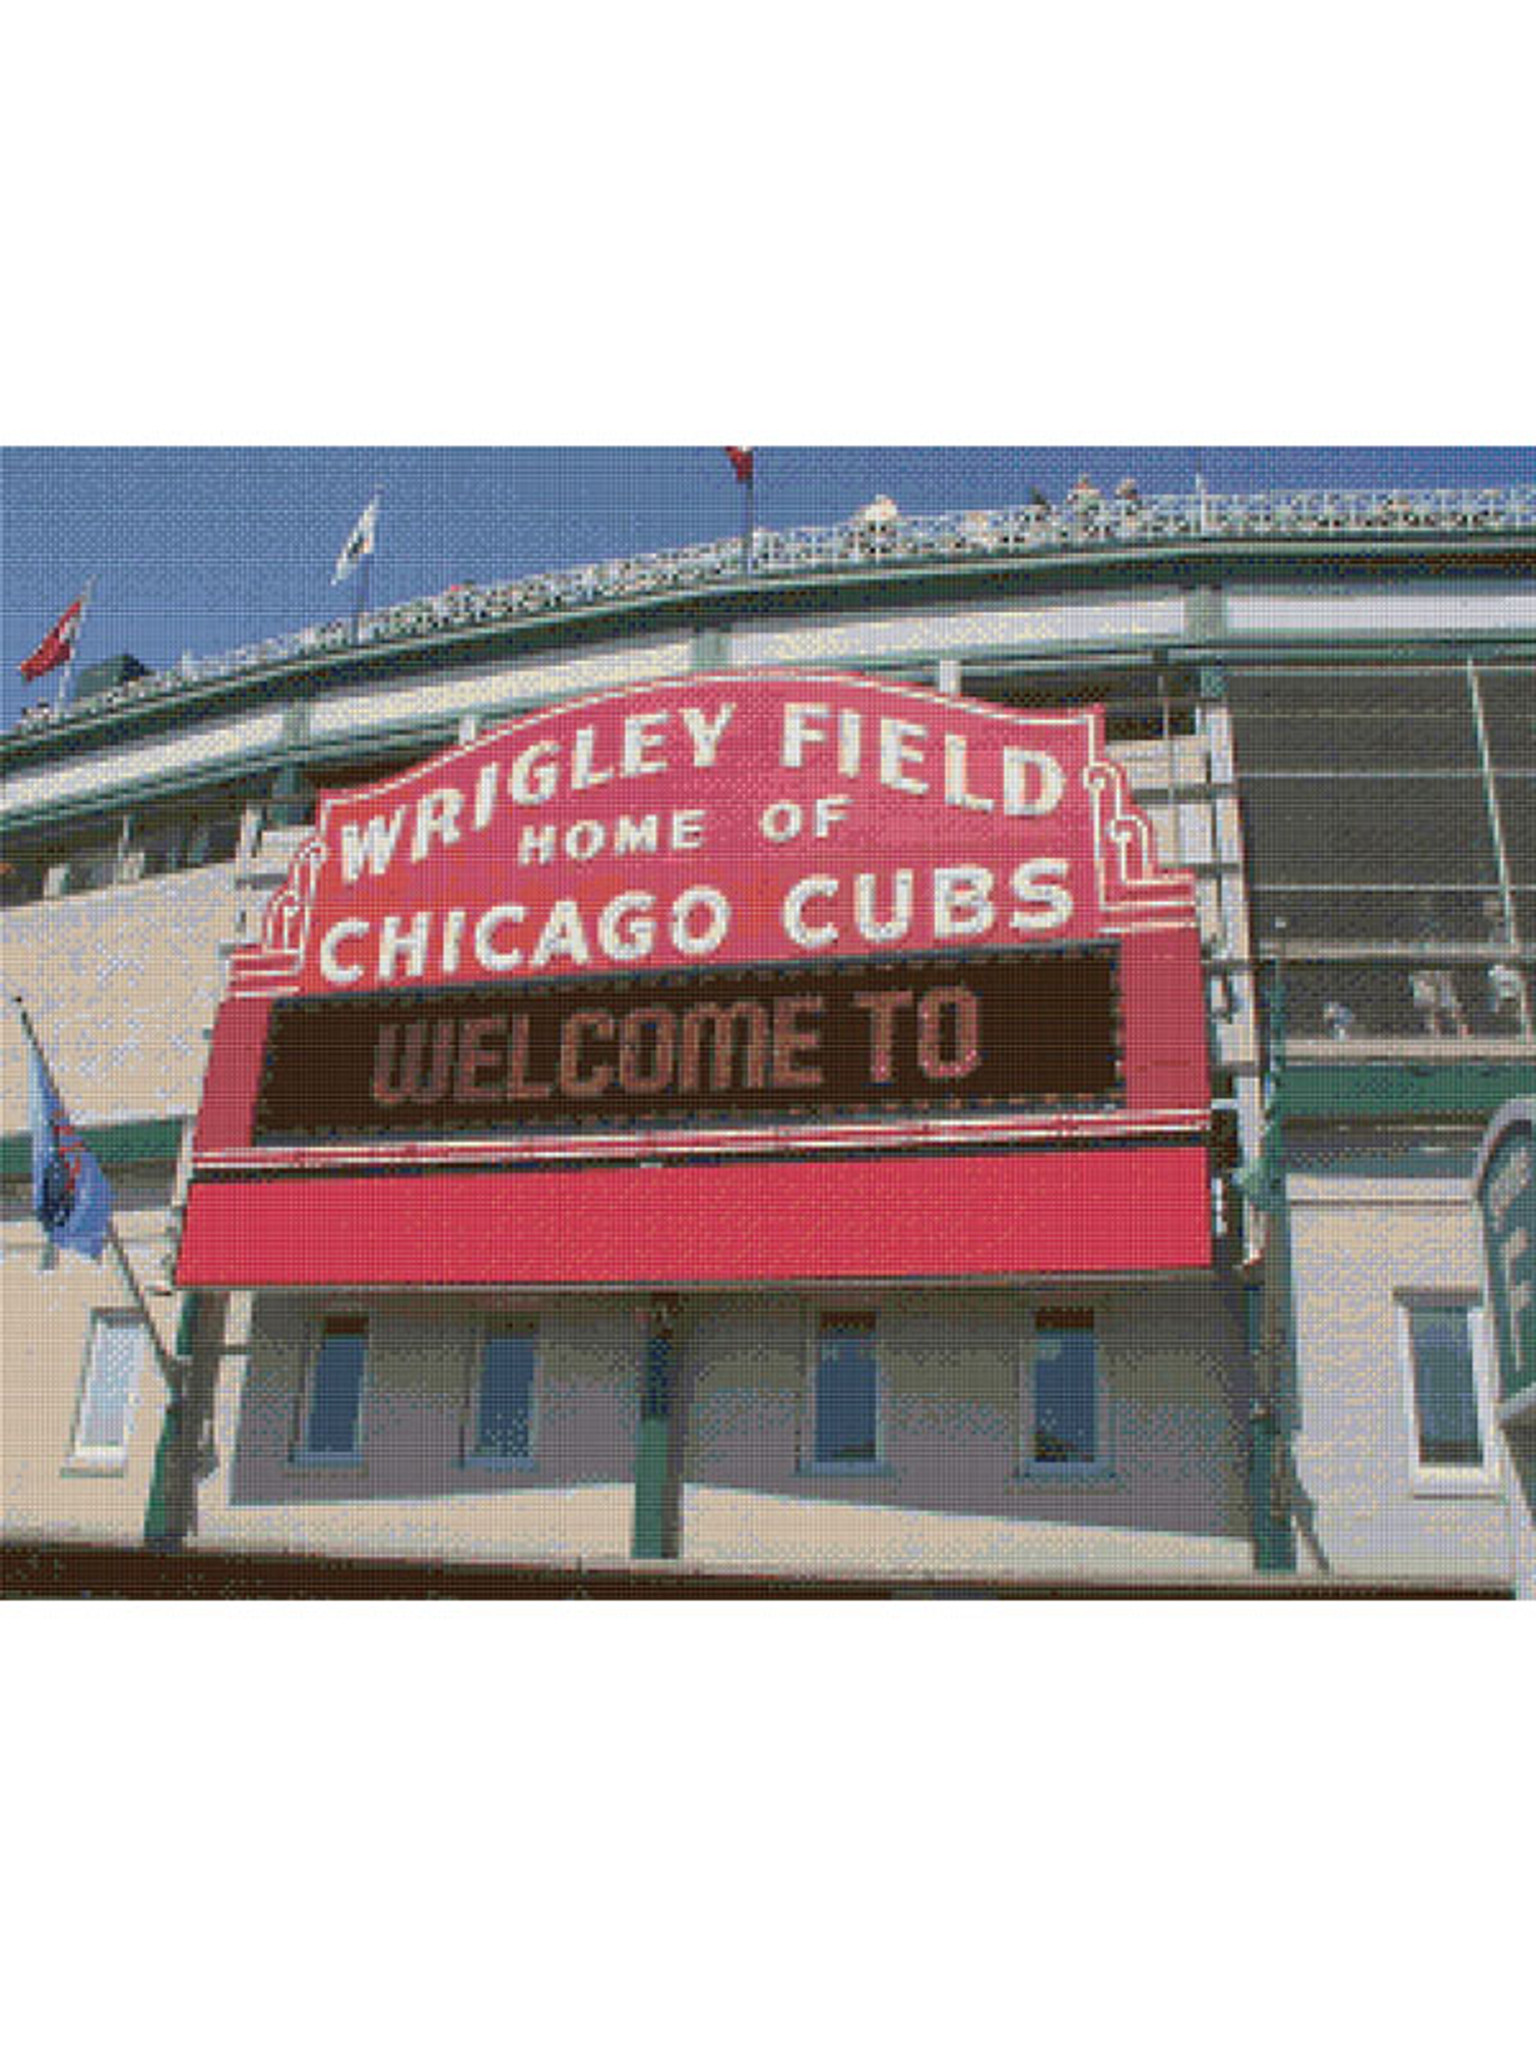 Chicago Cubs Wrigley Field Scoreboard Wood Sign